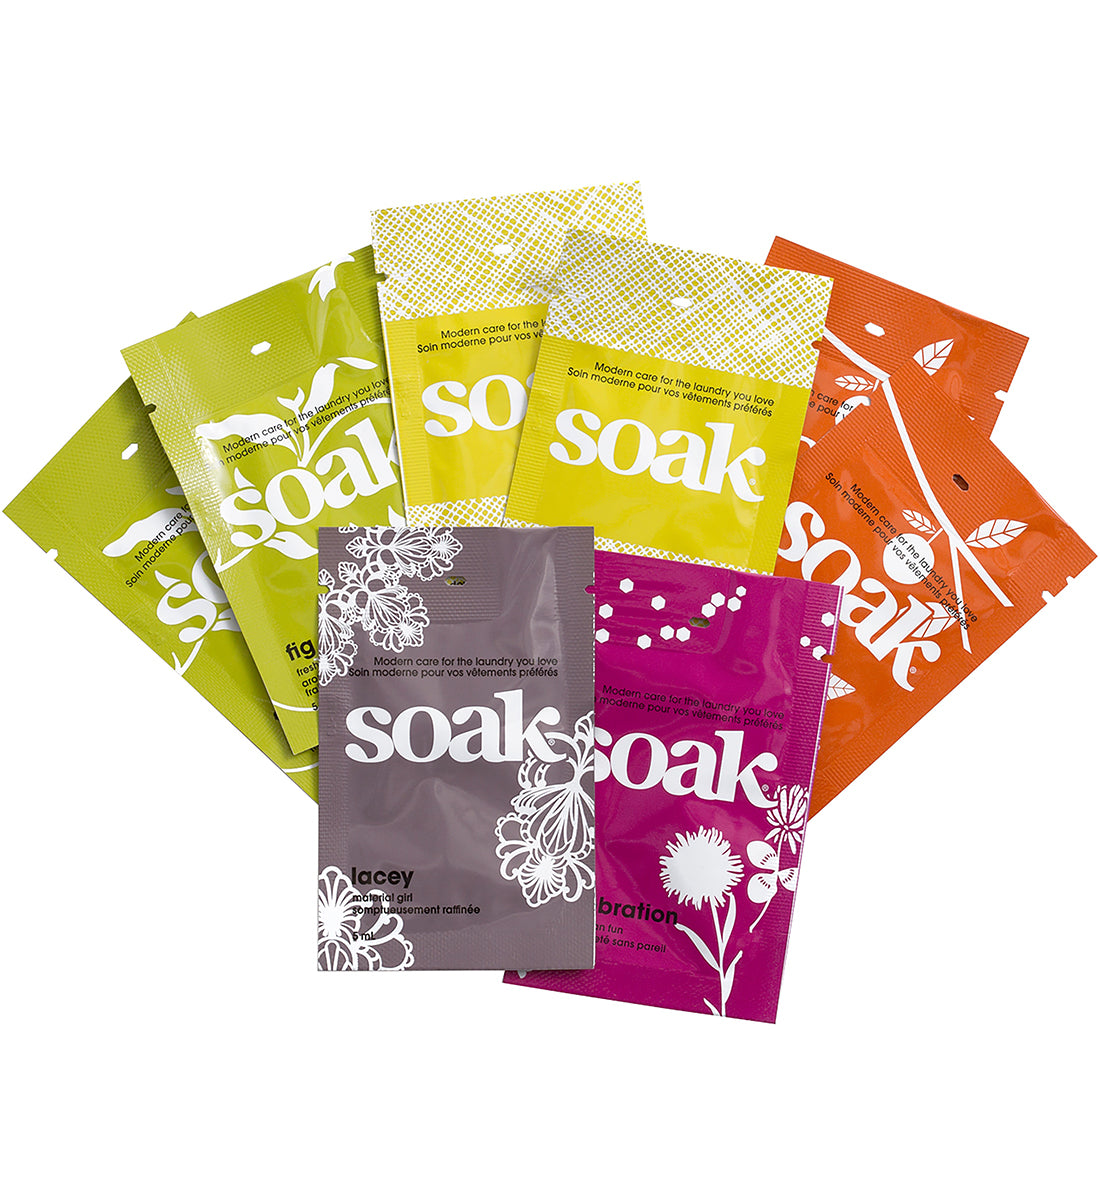 Soak Minisoak 5 ml Single Use Sachets Travel Kit (ST04 *8 Pack Assorted*)